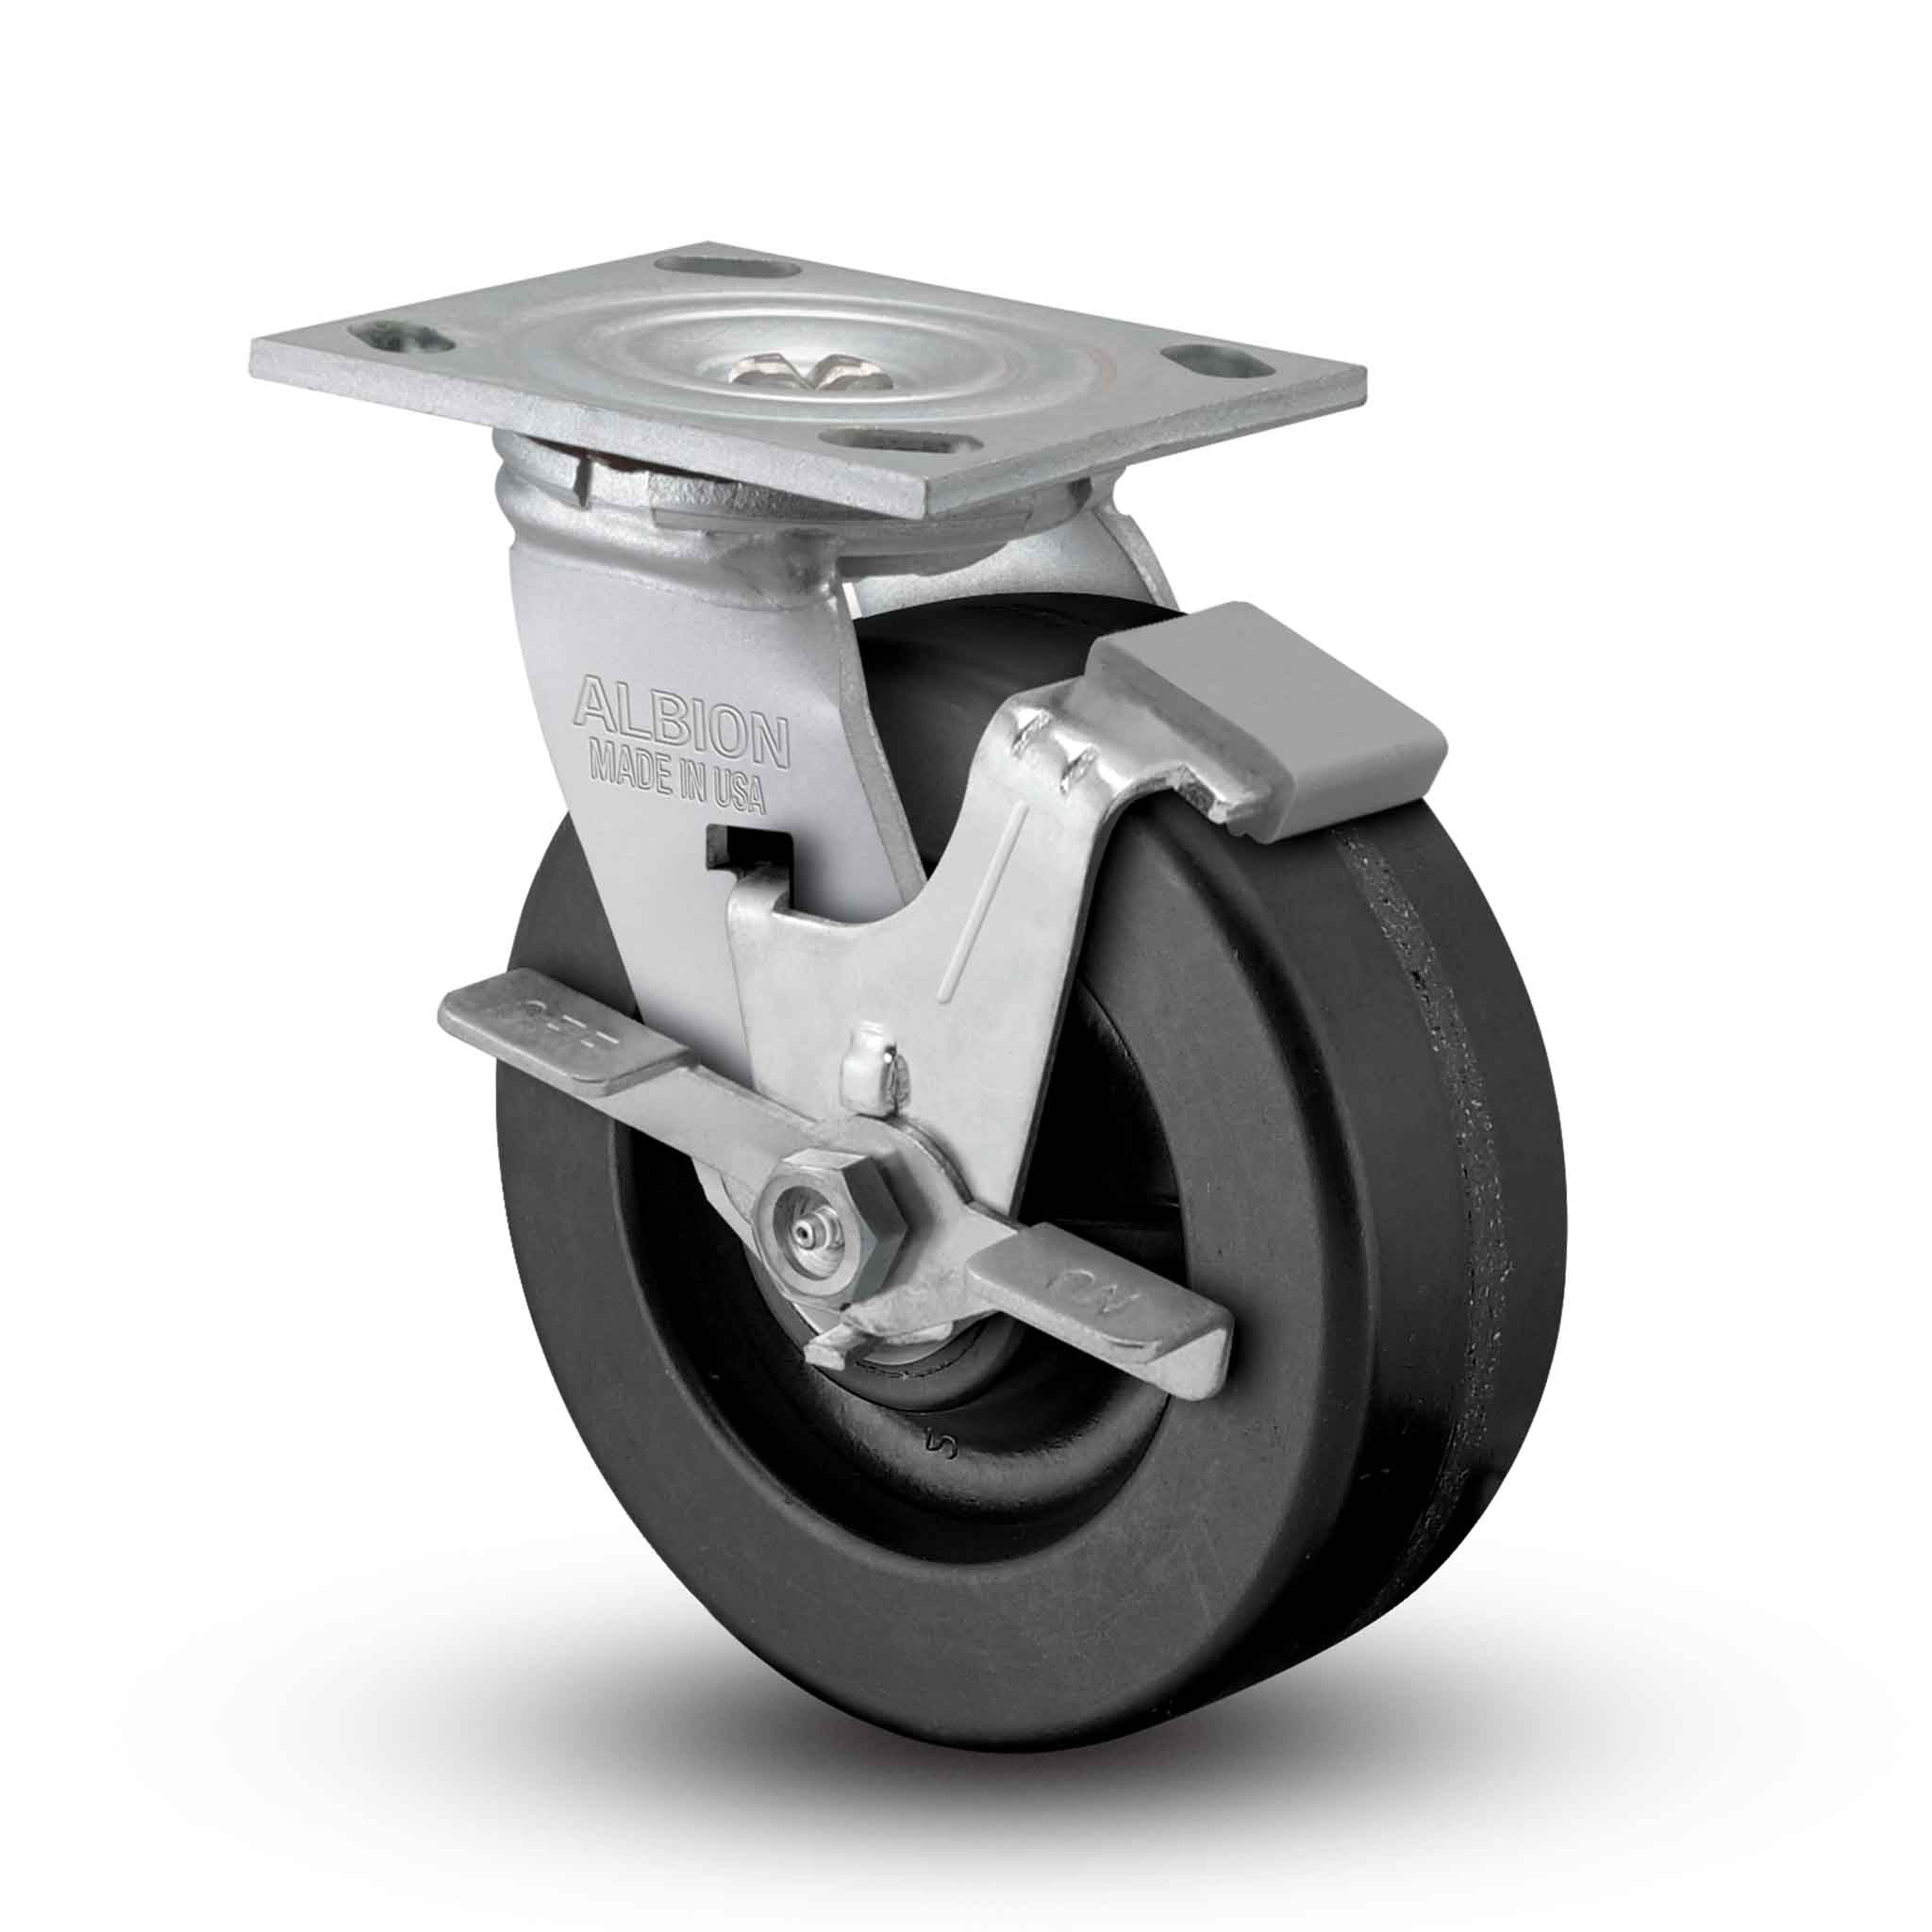 4 3.5" steel swivel wheels caster casters with brake lock 385 lb capacity each 